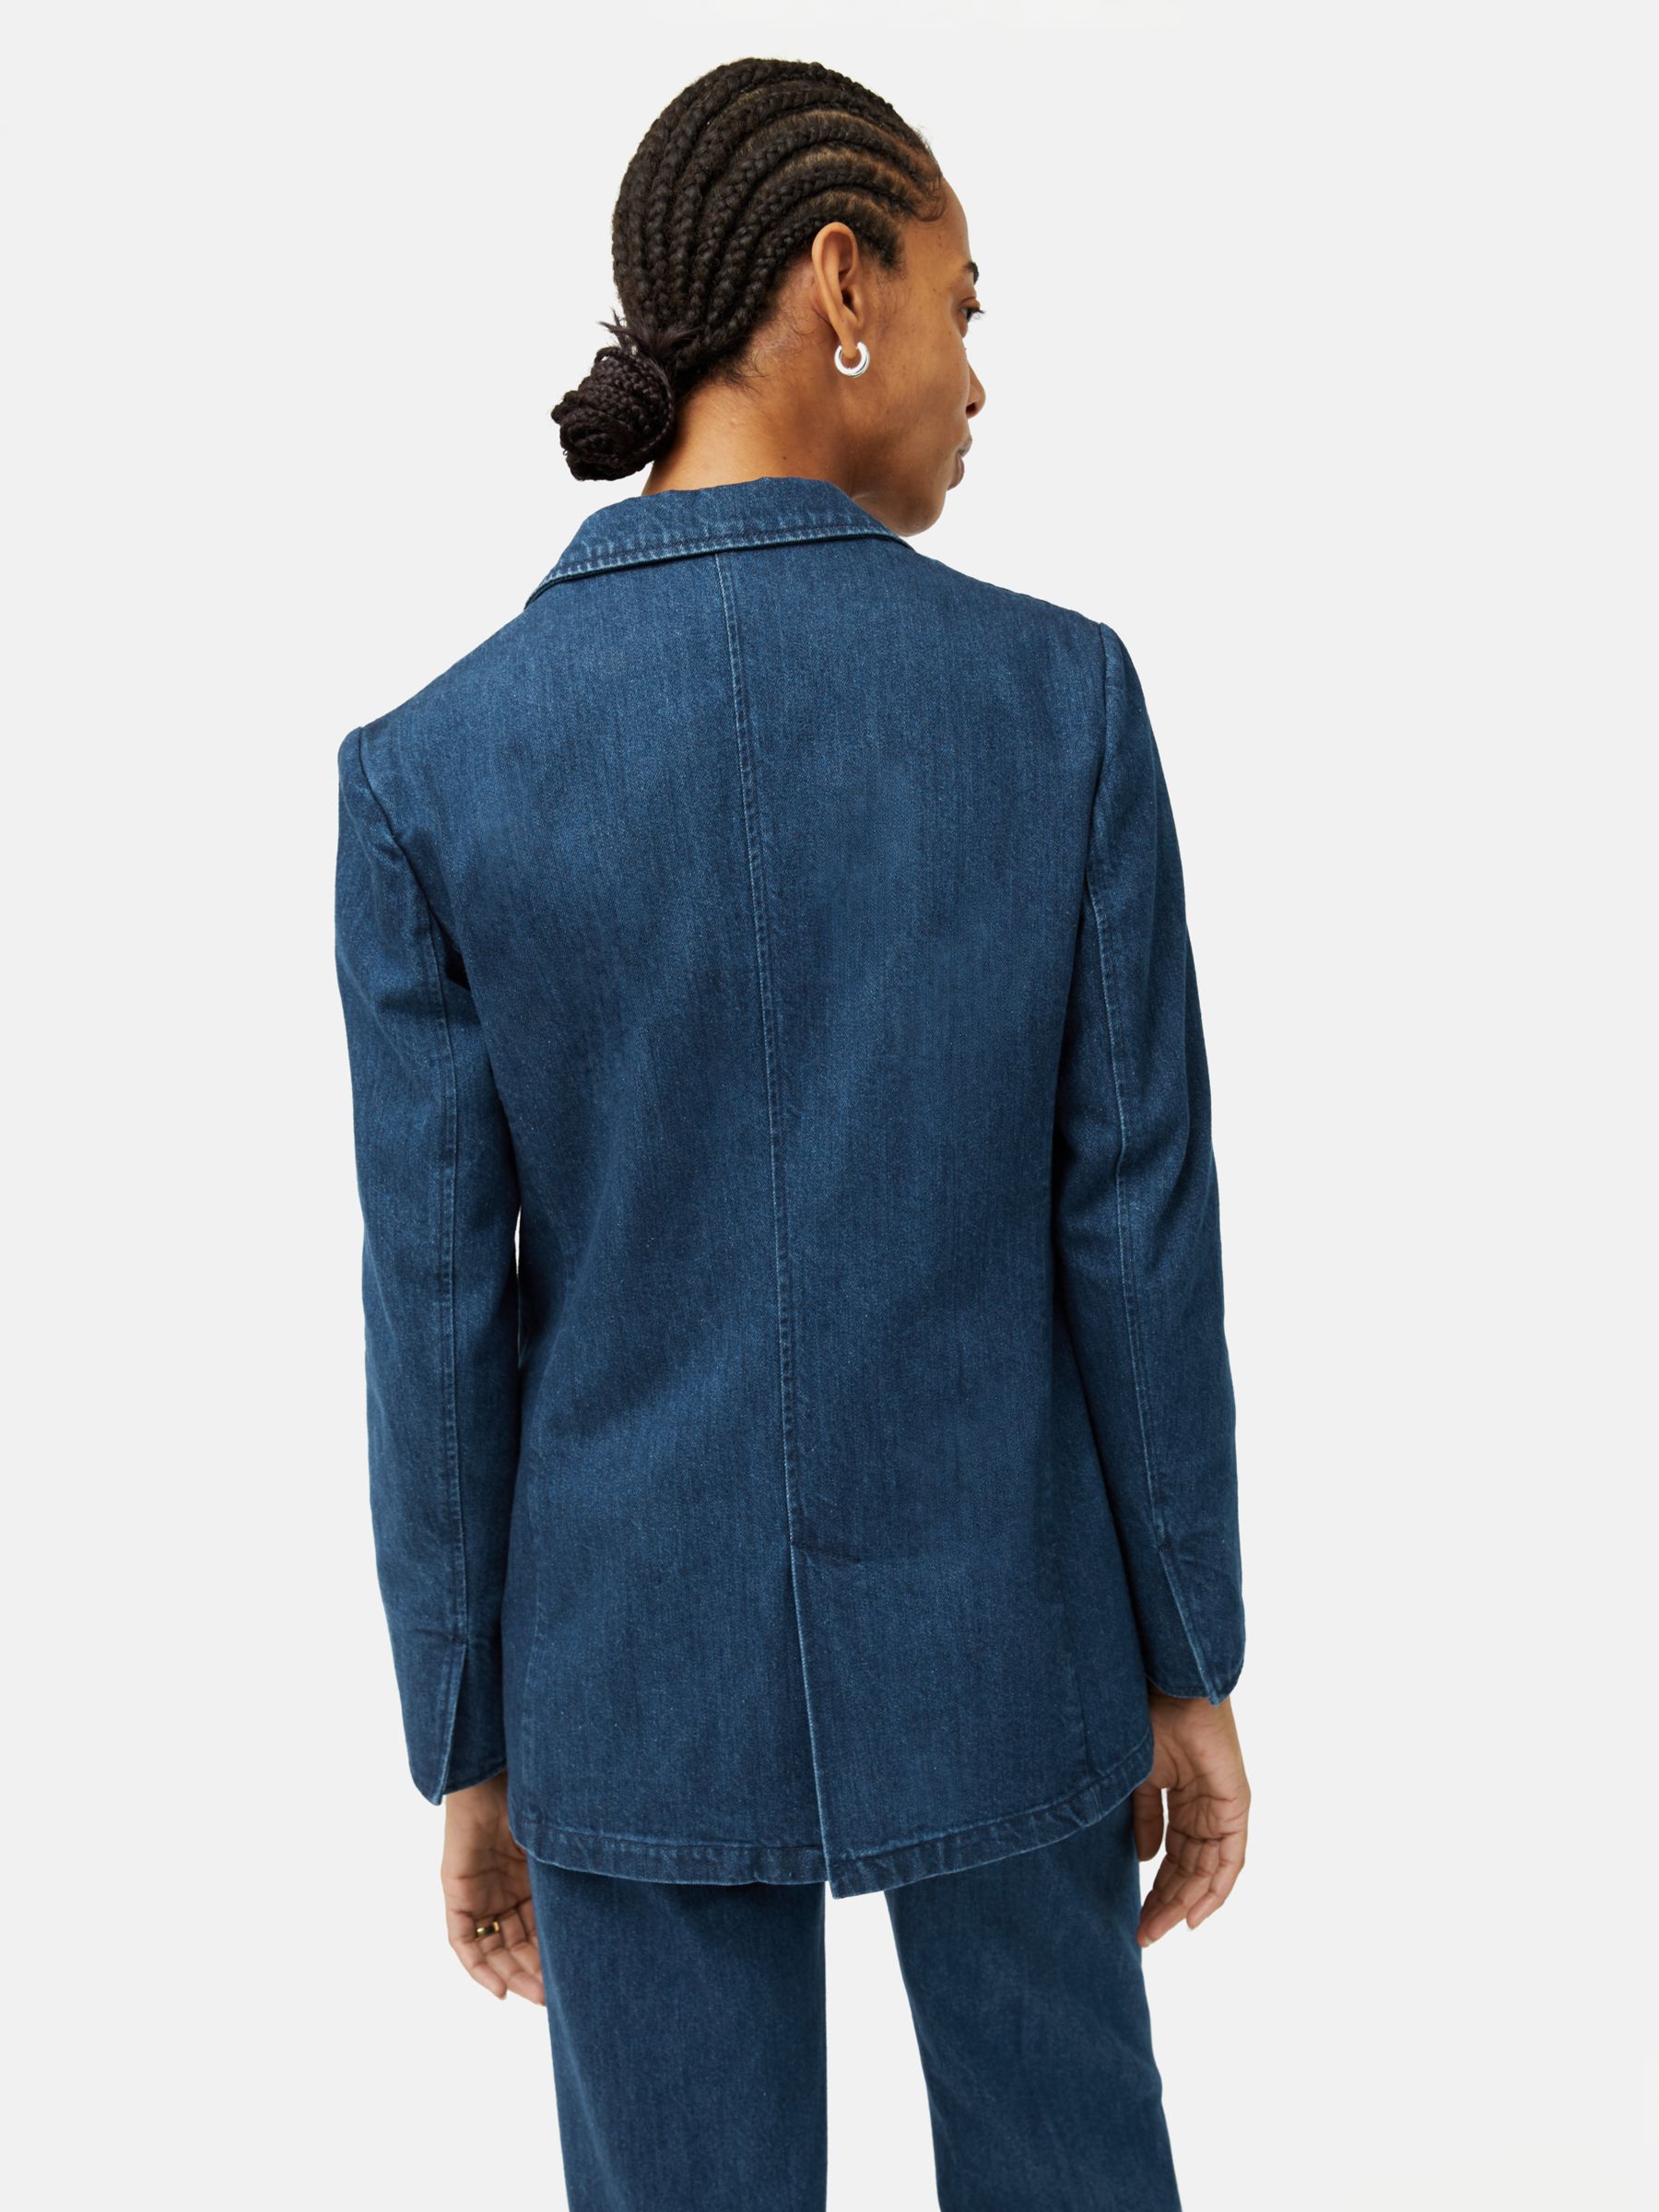 Buy Jigsaw Denim Tailored Jacket, Indigo Online at johnlewis.com